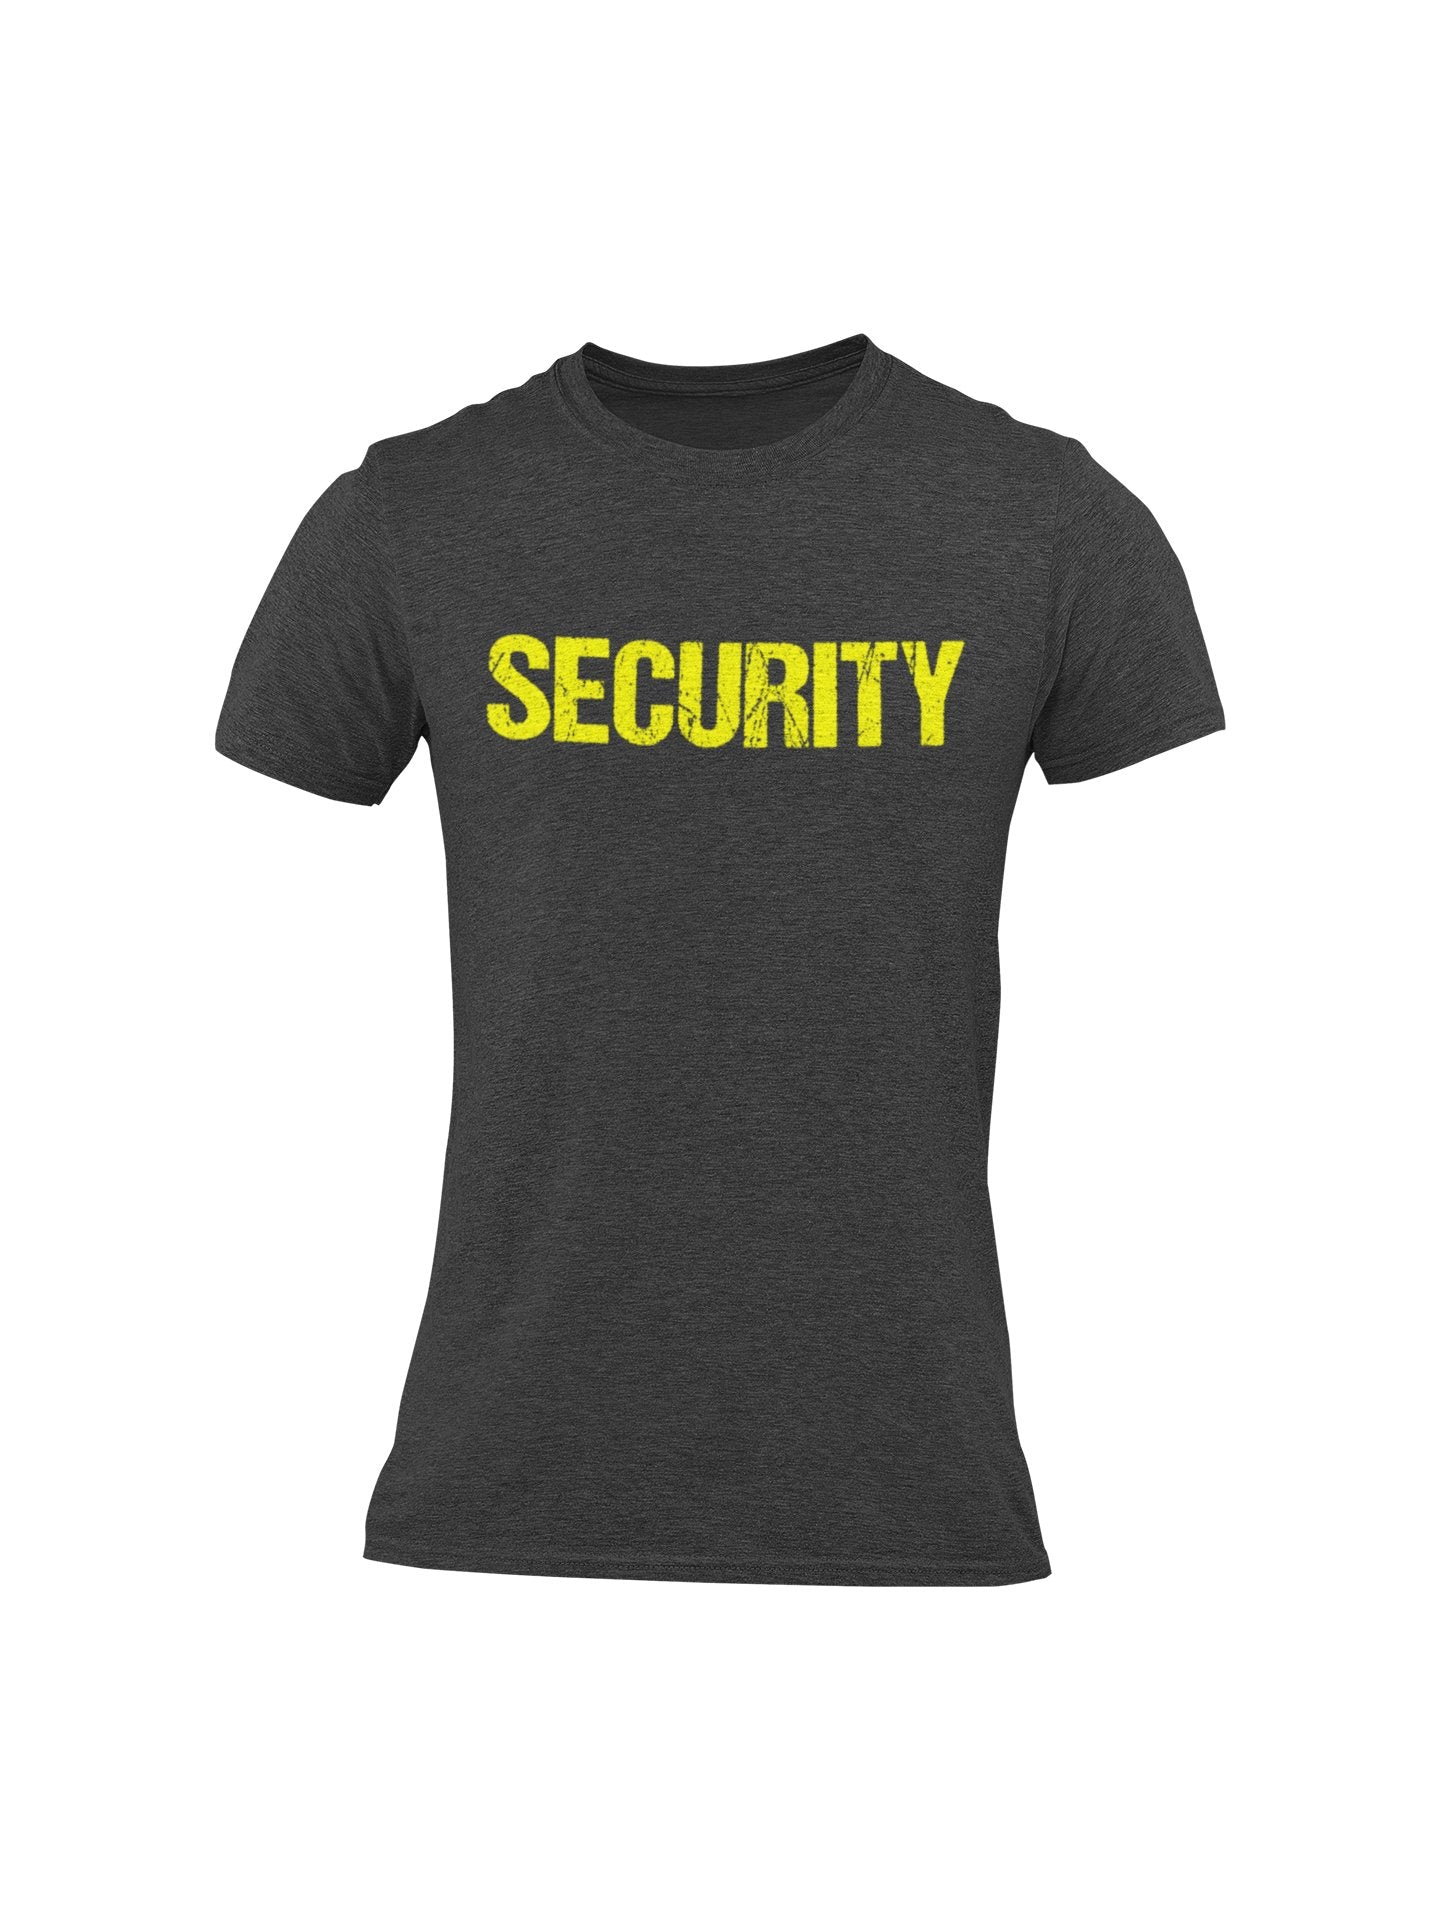 Security Men's Tee (Distressed Design, Heather Charcoal & Neon)